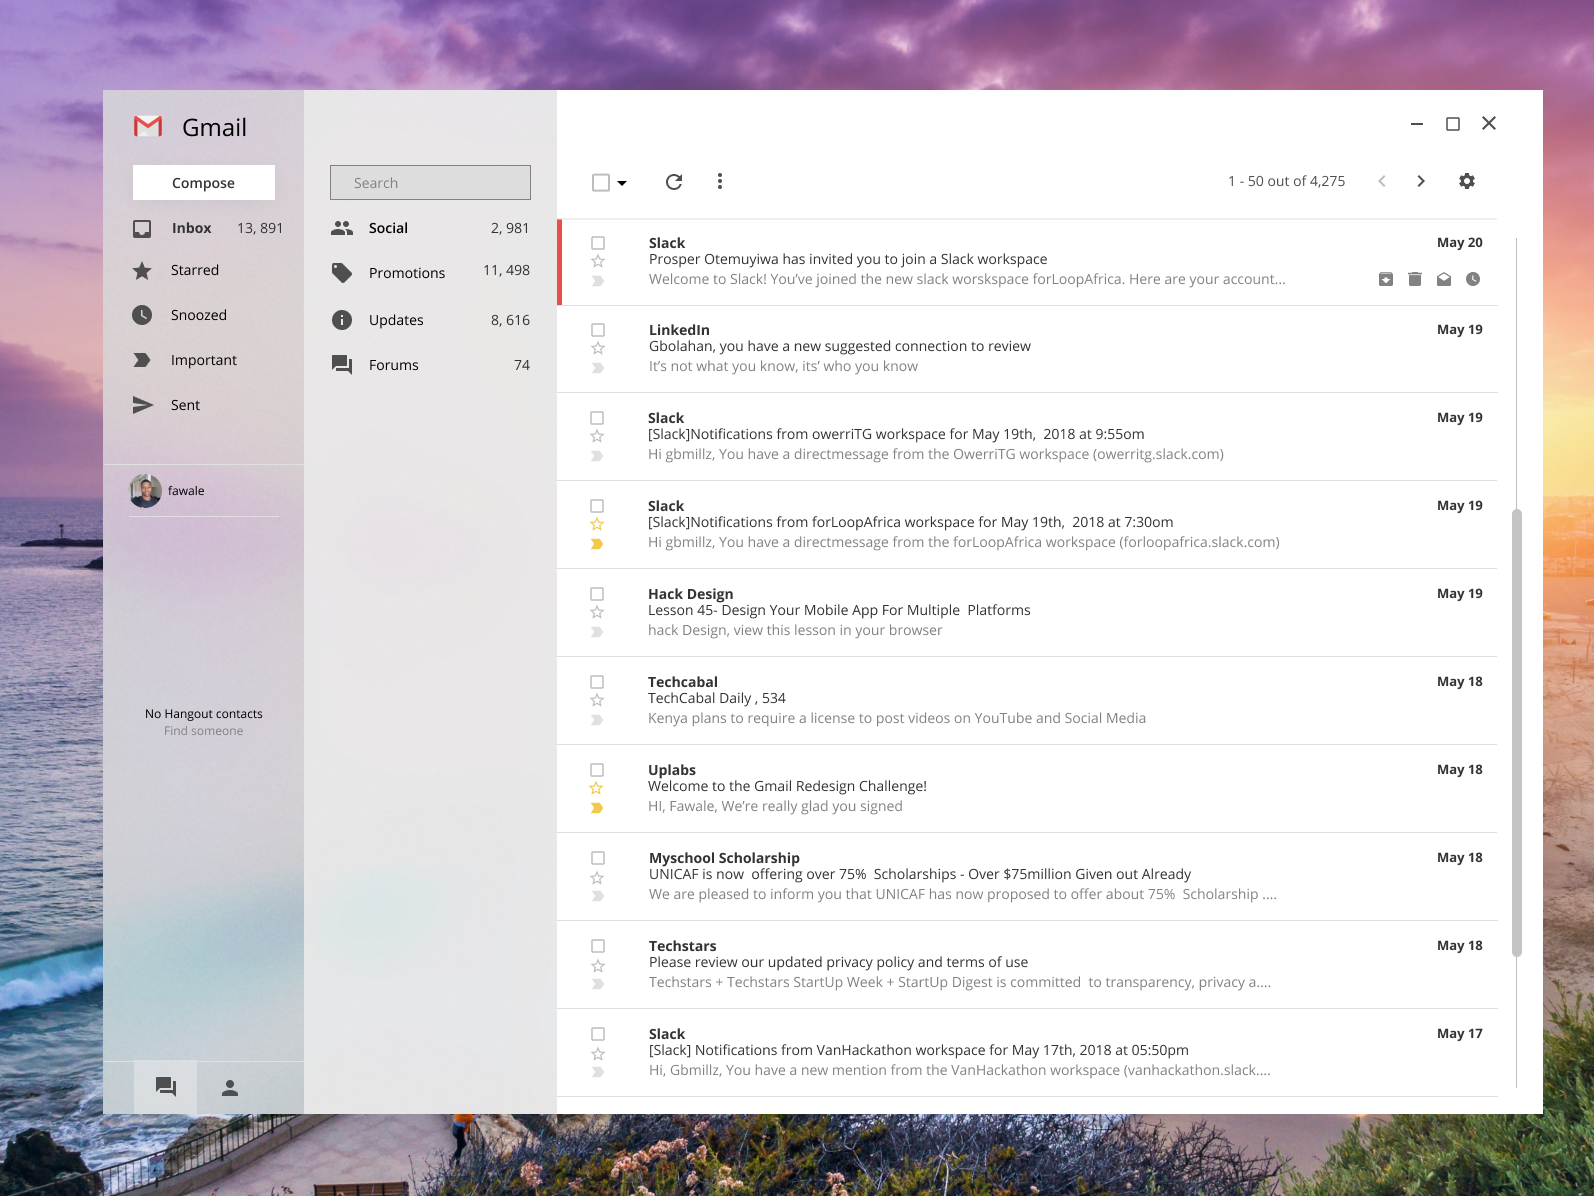 gmail desktop app for windows 10 free download